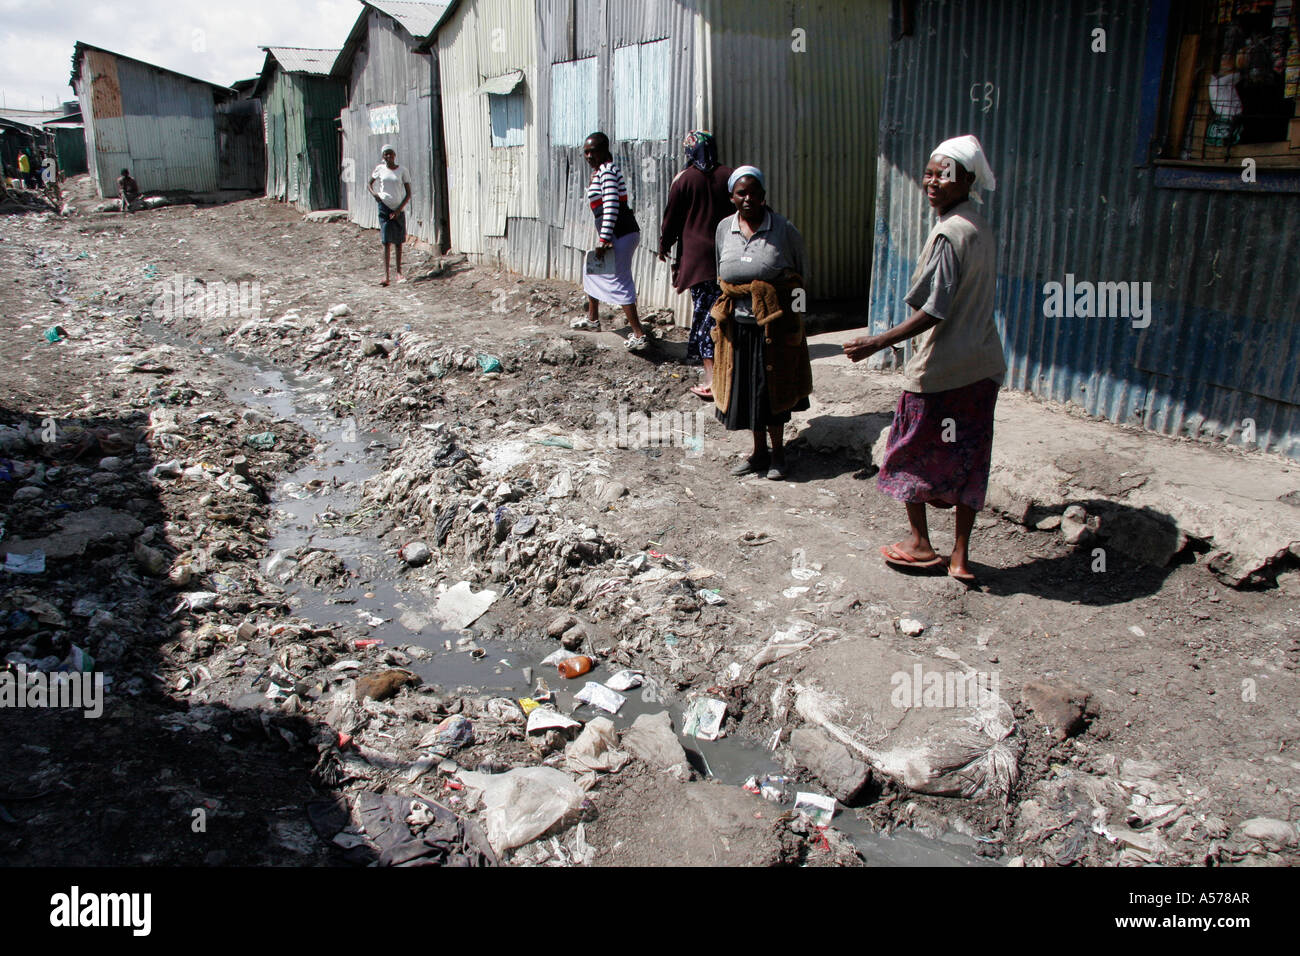 Painet jb1466 kenya slum street mukuru nairobi mombasa africa poverty country developing nation less economically developed Stock Photo